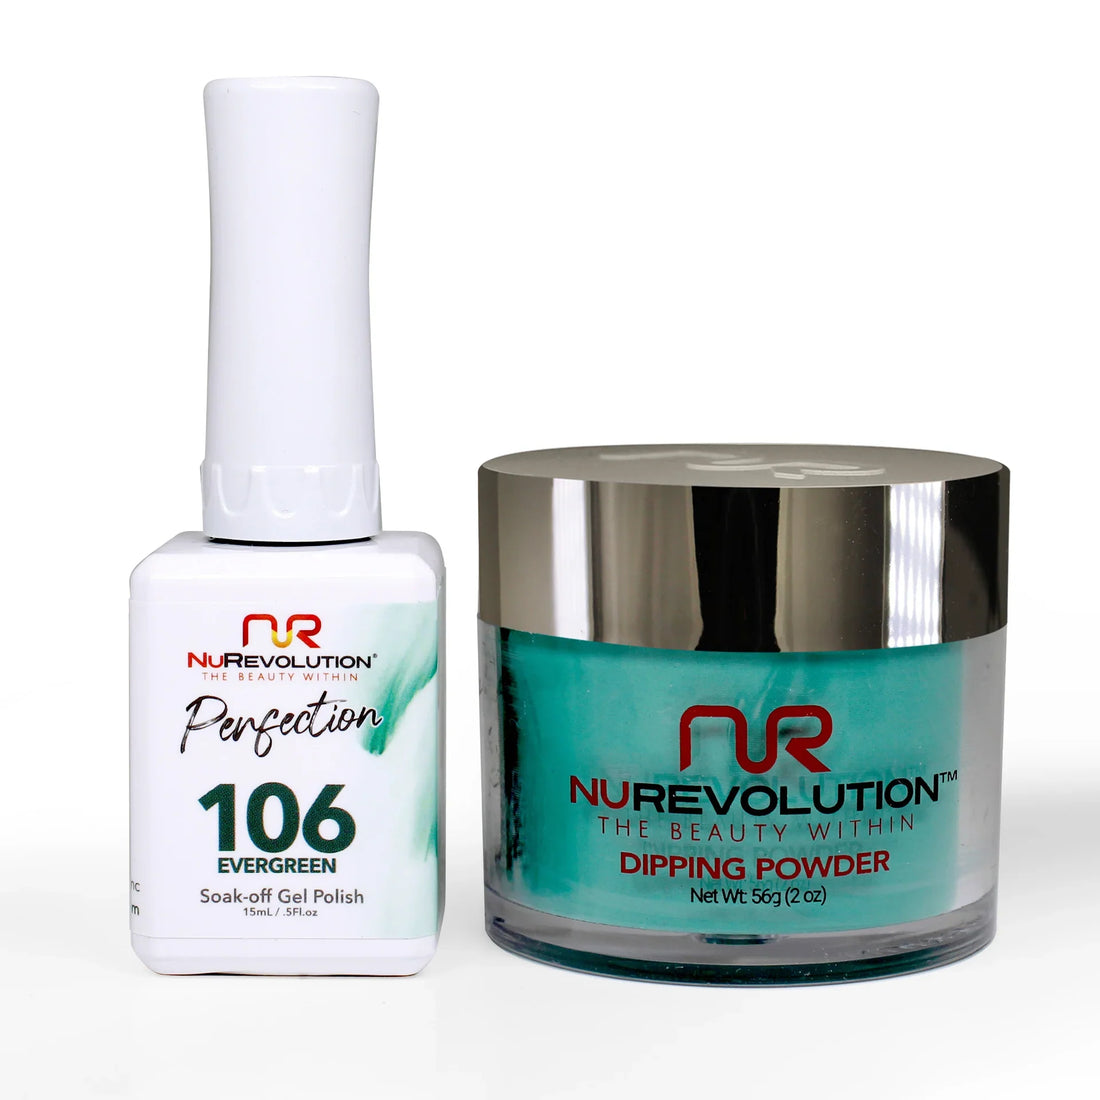 NuRevolution Perfection 106 Evergreen